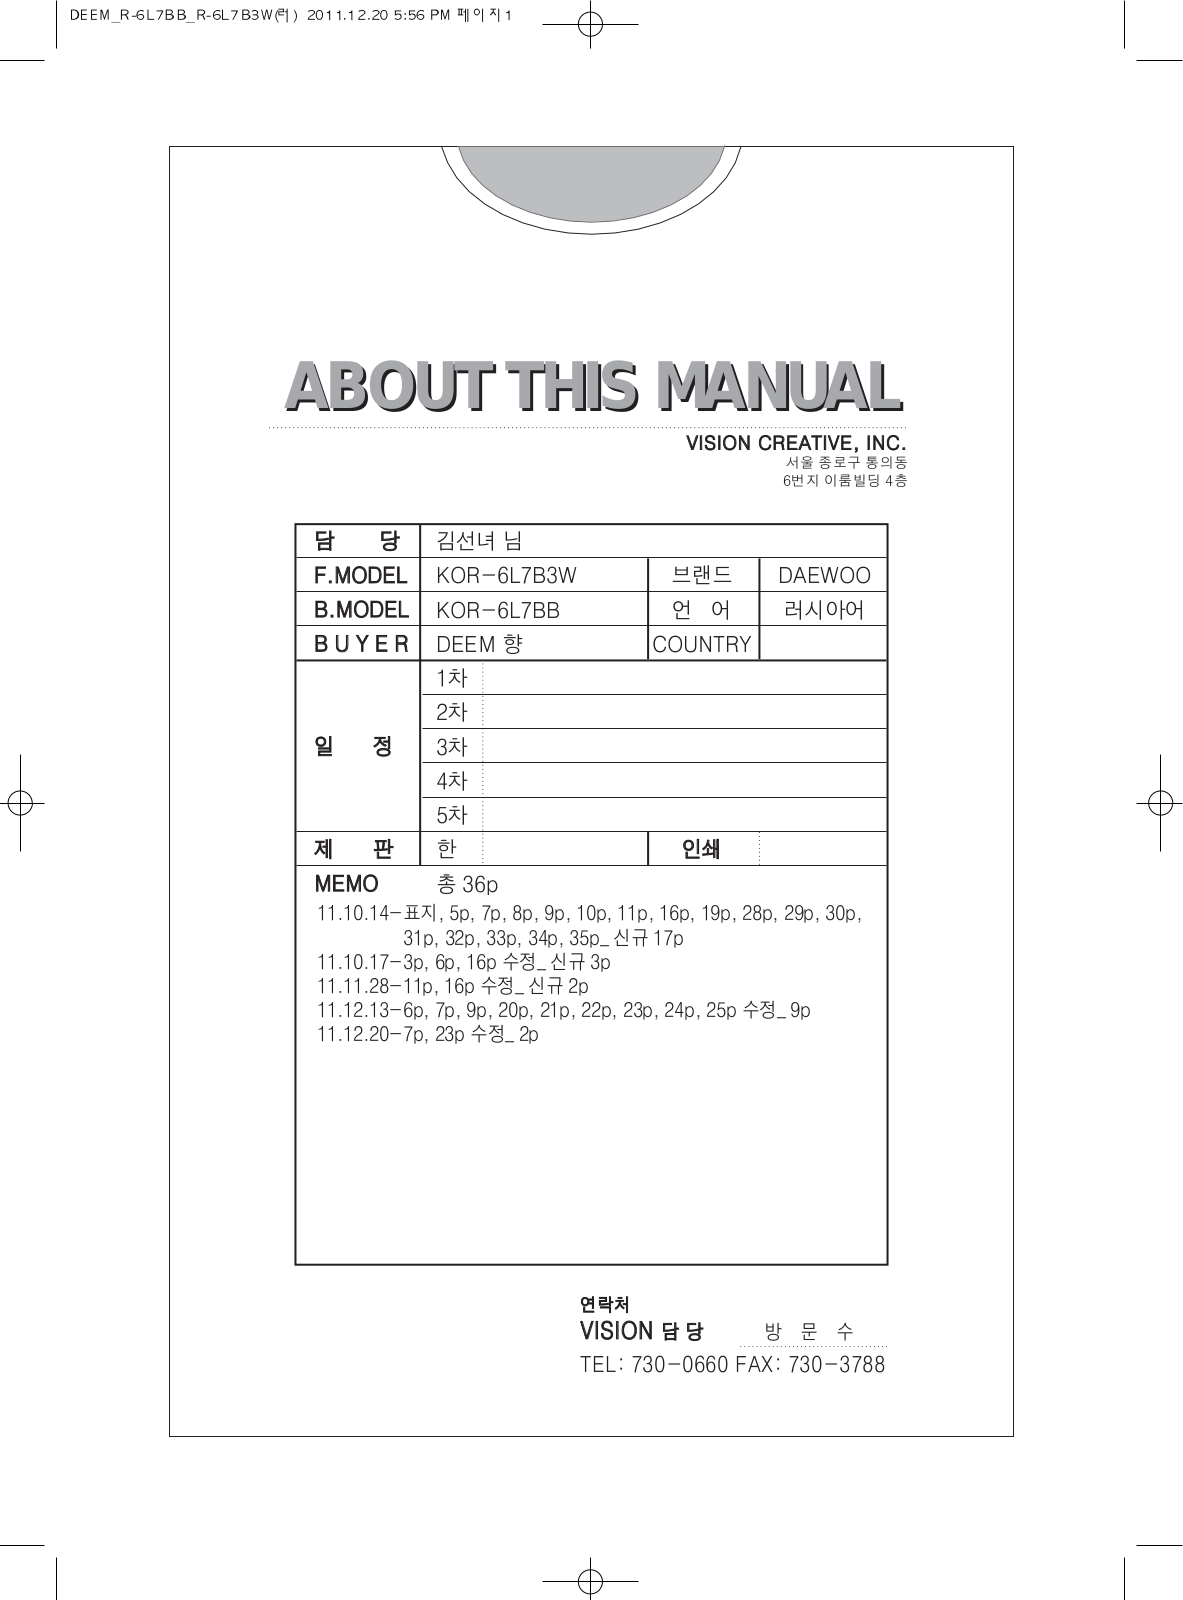 Daewoo KOR-6L7BB User Manual